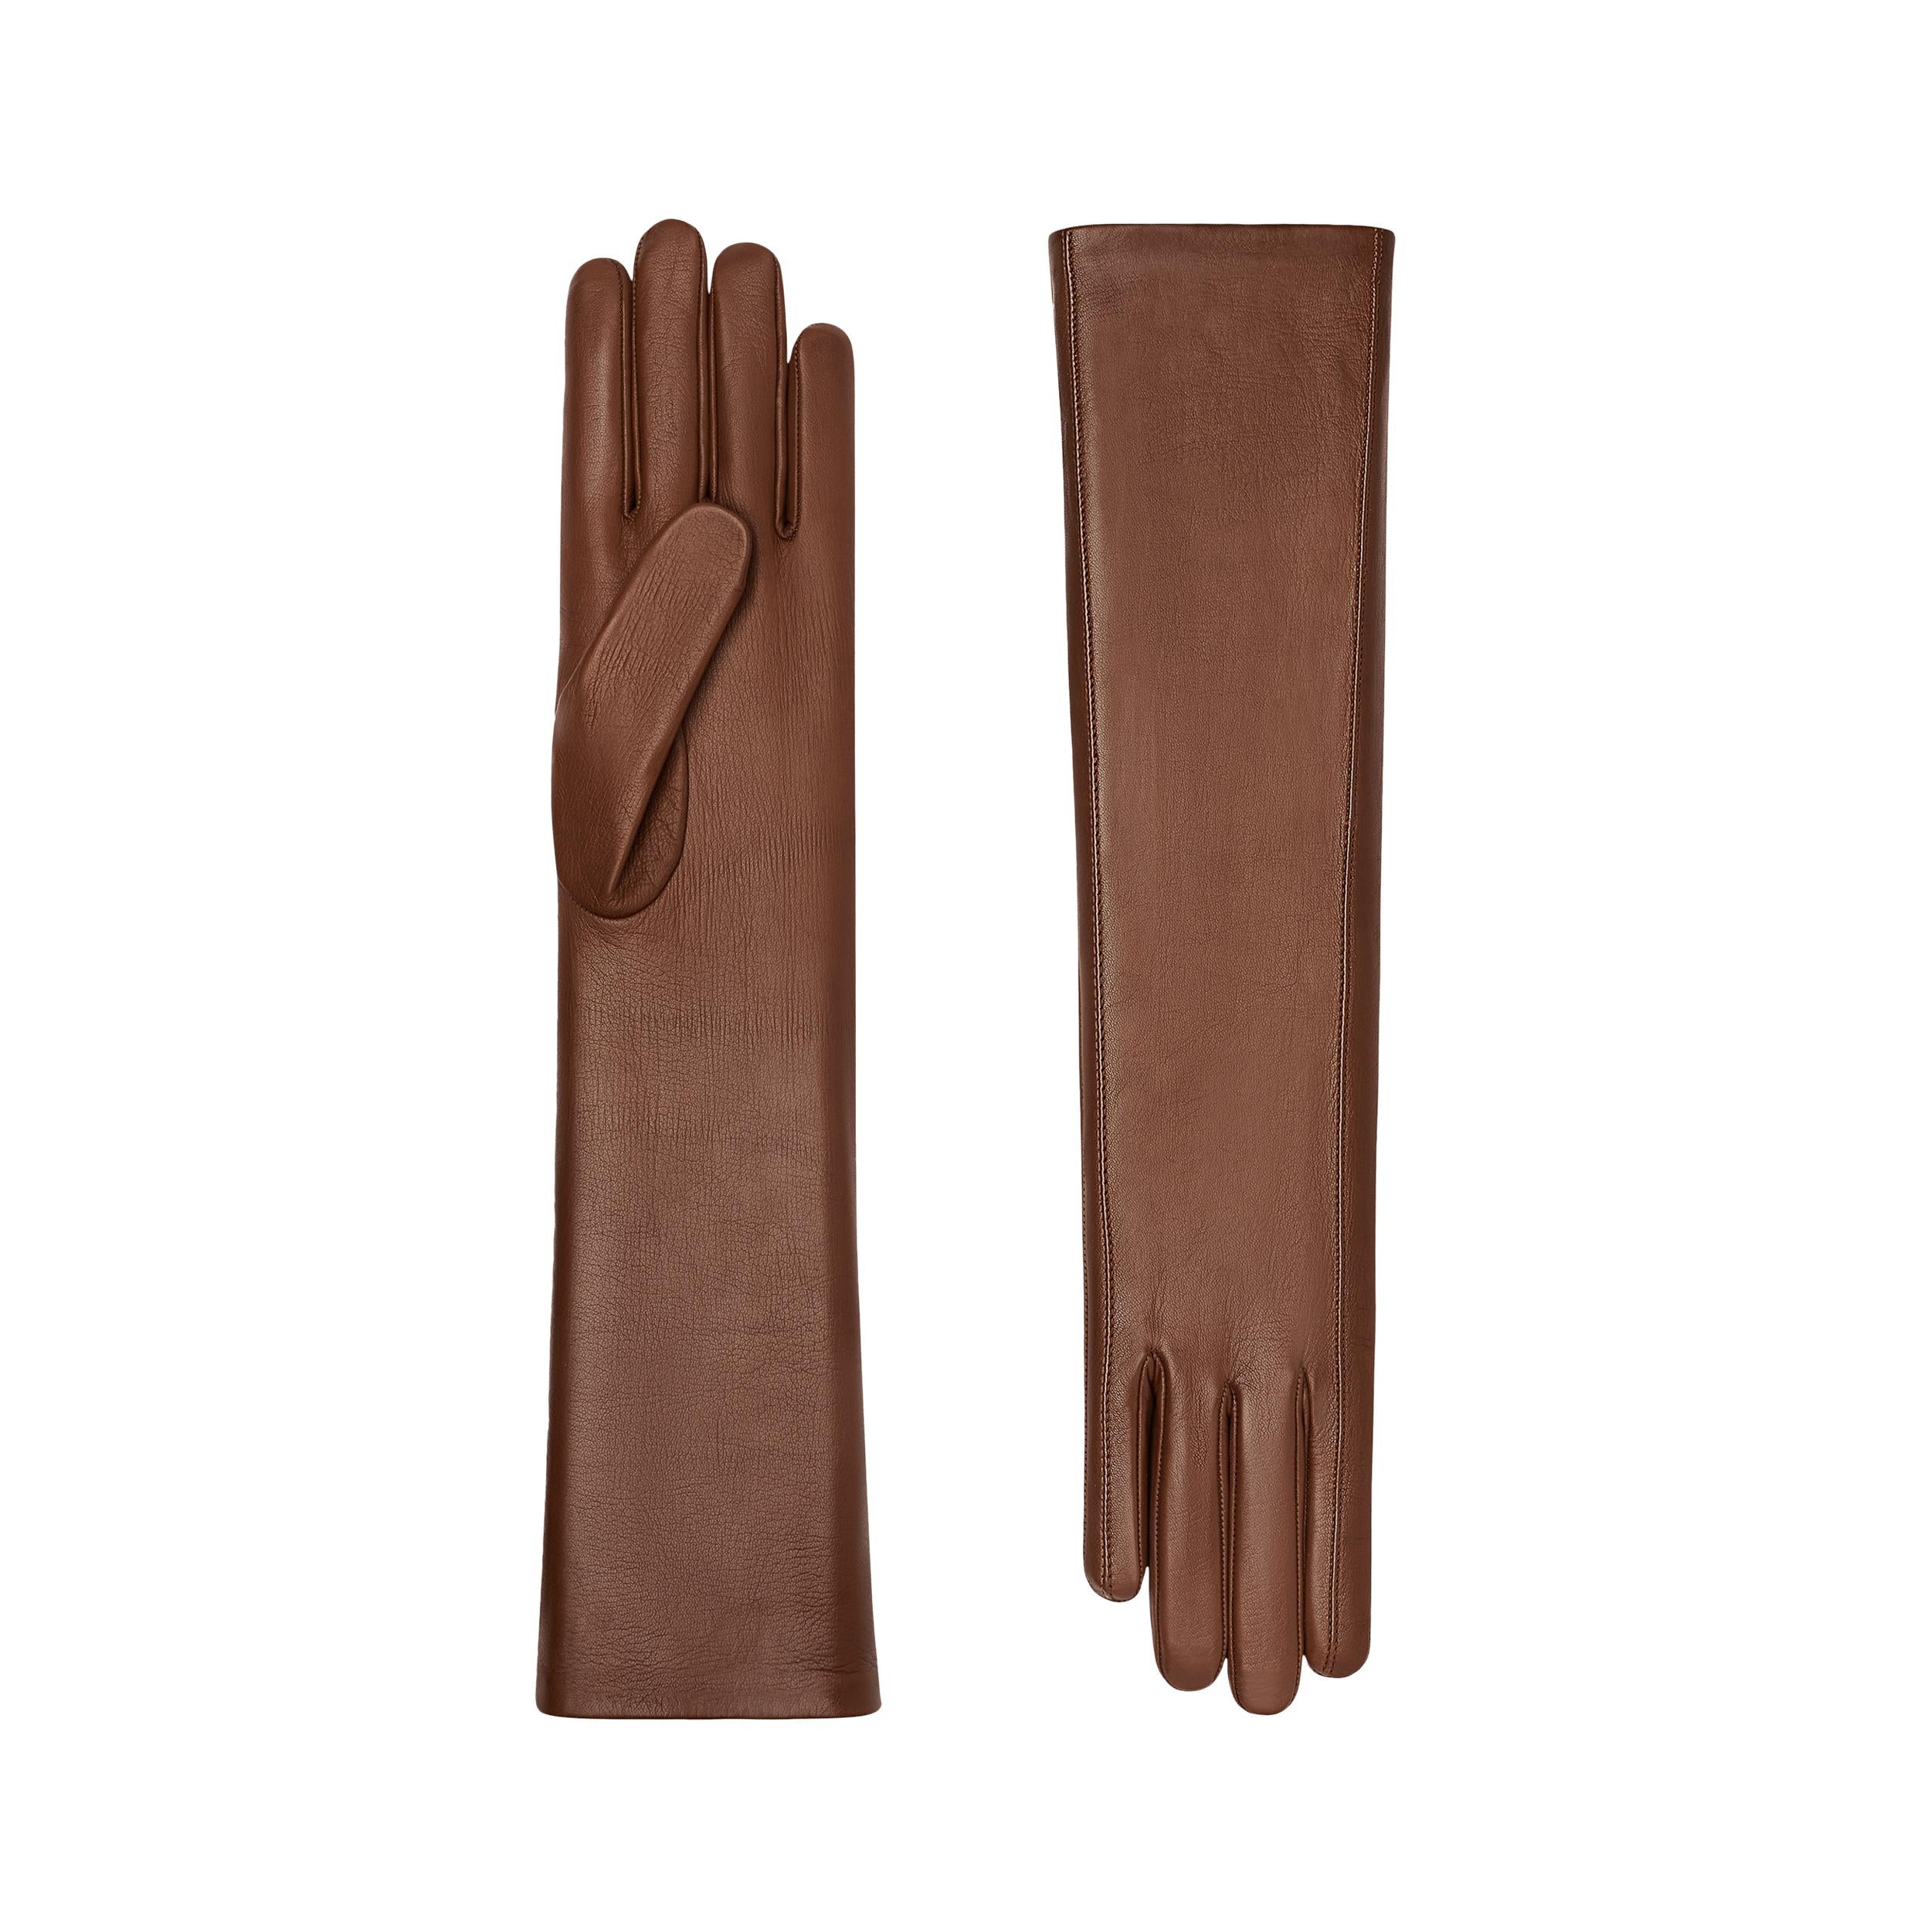 Cornelia James - Leather Gloves with Silk Lining - Clémence - Tan - Luxury Leather Gloves by Cornelia James